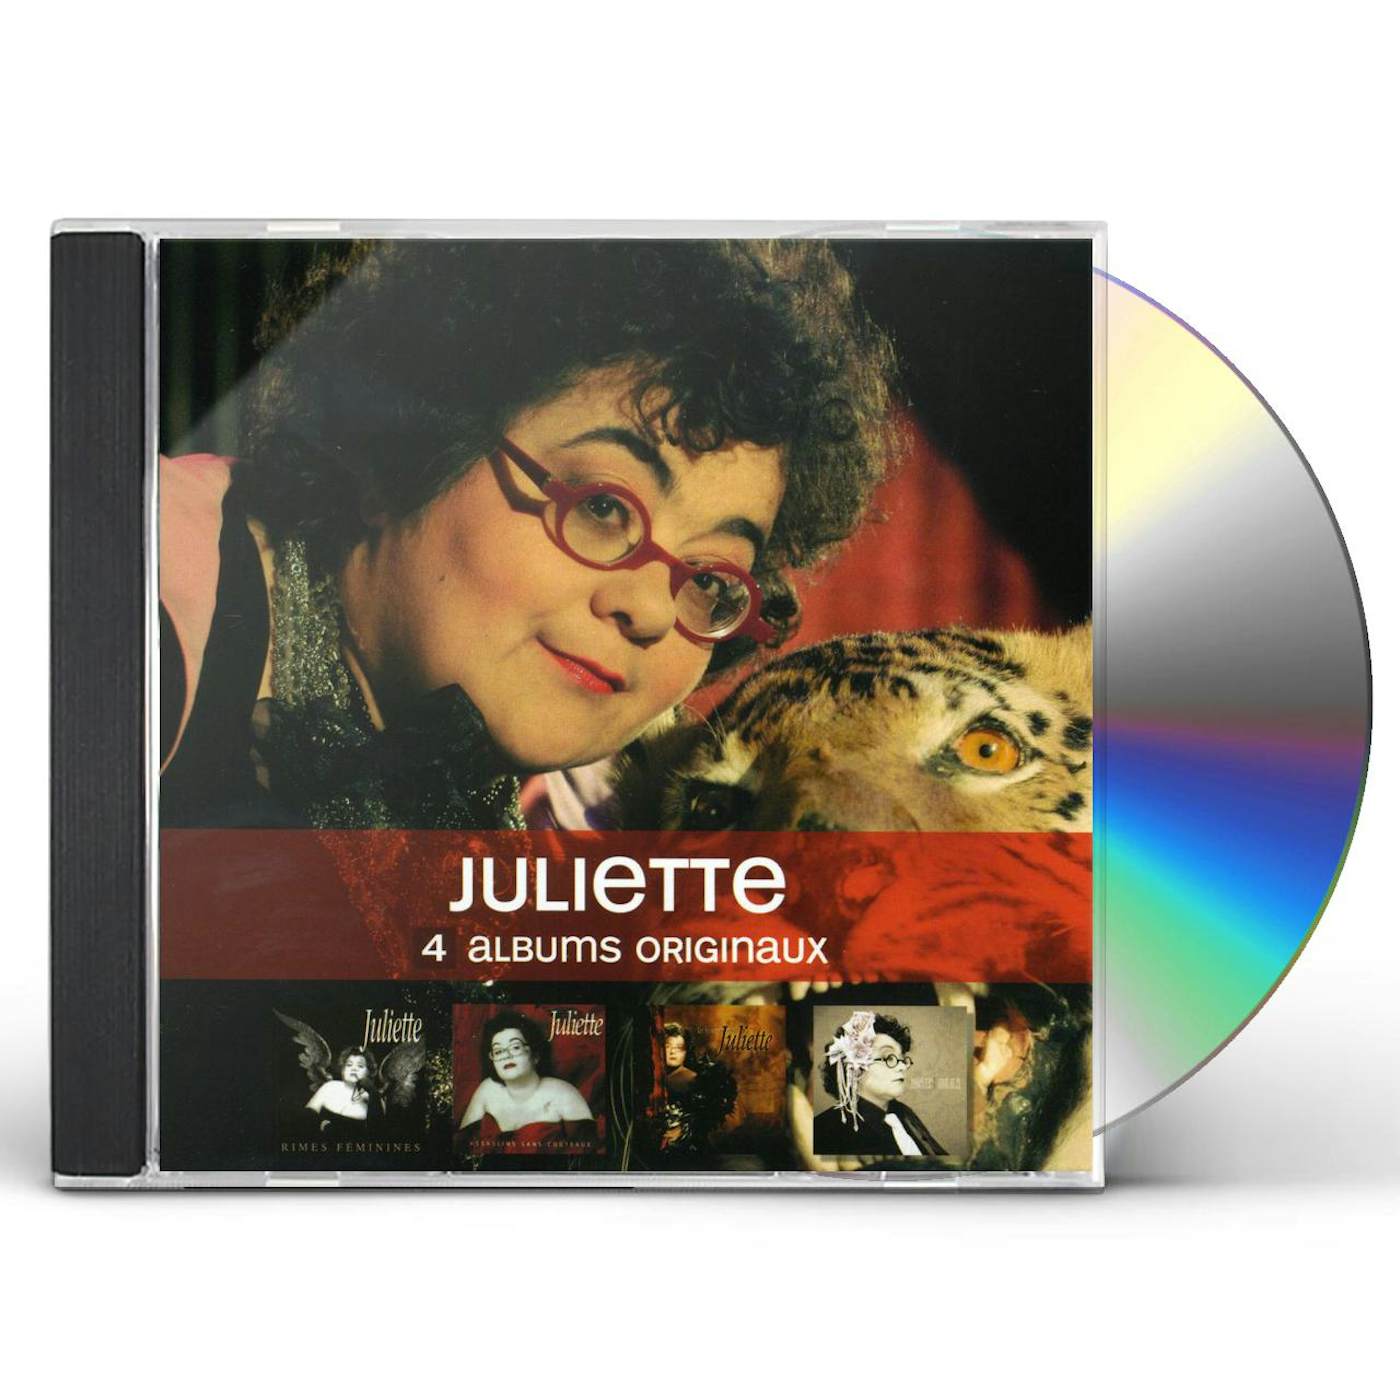 Juliette 4 ORIGINAL ALBUMS CD